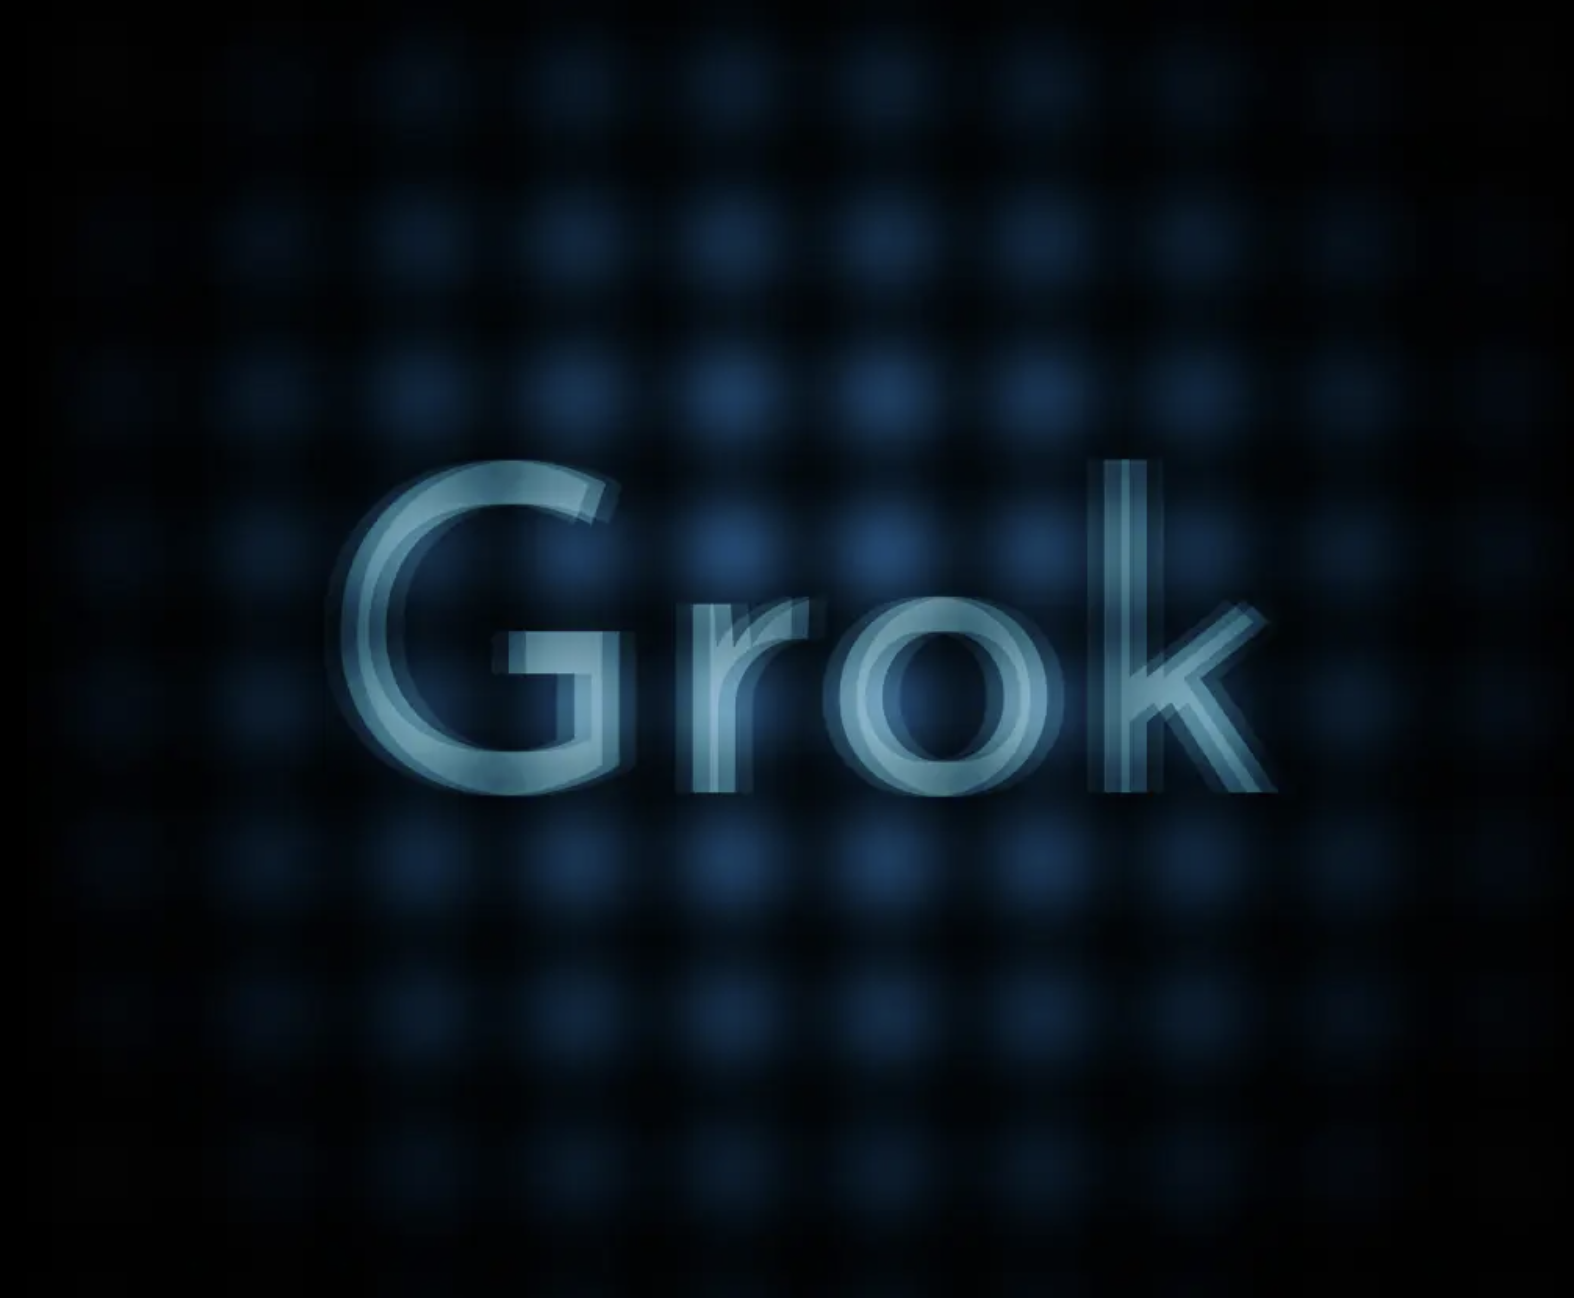 Grok-1.5: Massive 128K Context Window, Achieving 90% In Math Tasks, Set To Launch On 𝕏 Platform